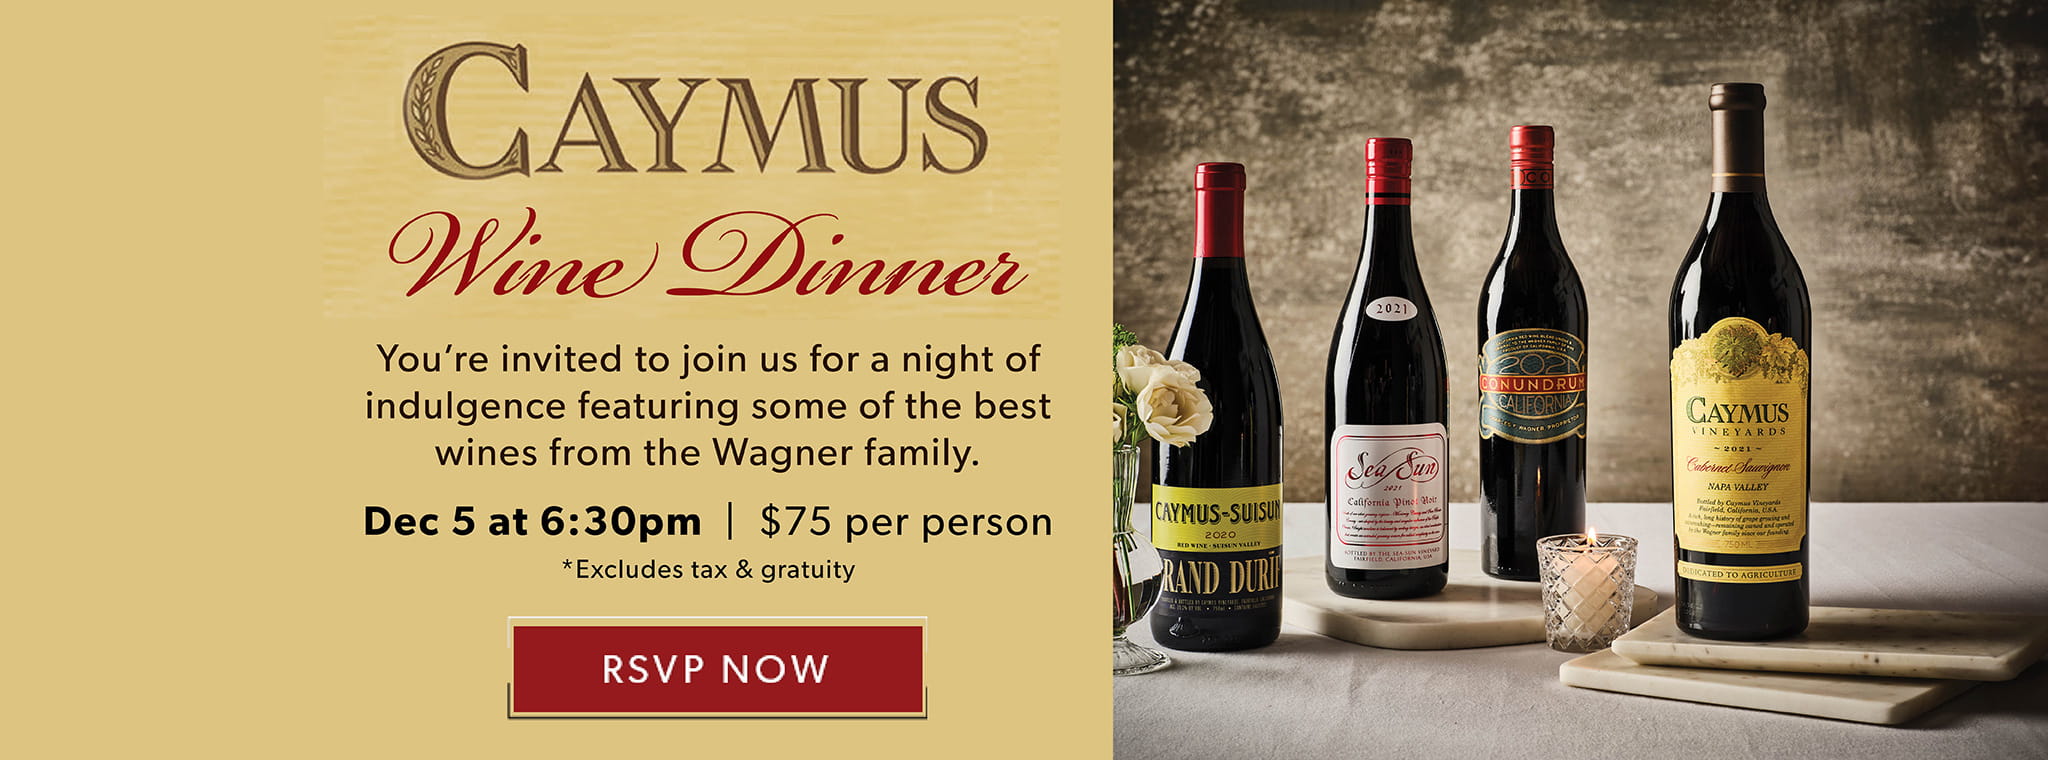 December 5 Caymus Wine Dinner